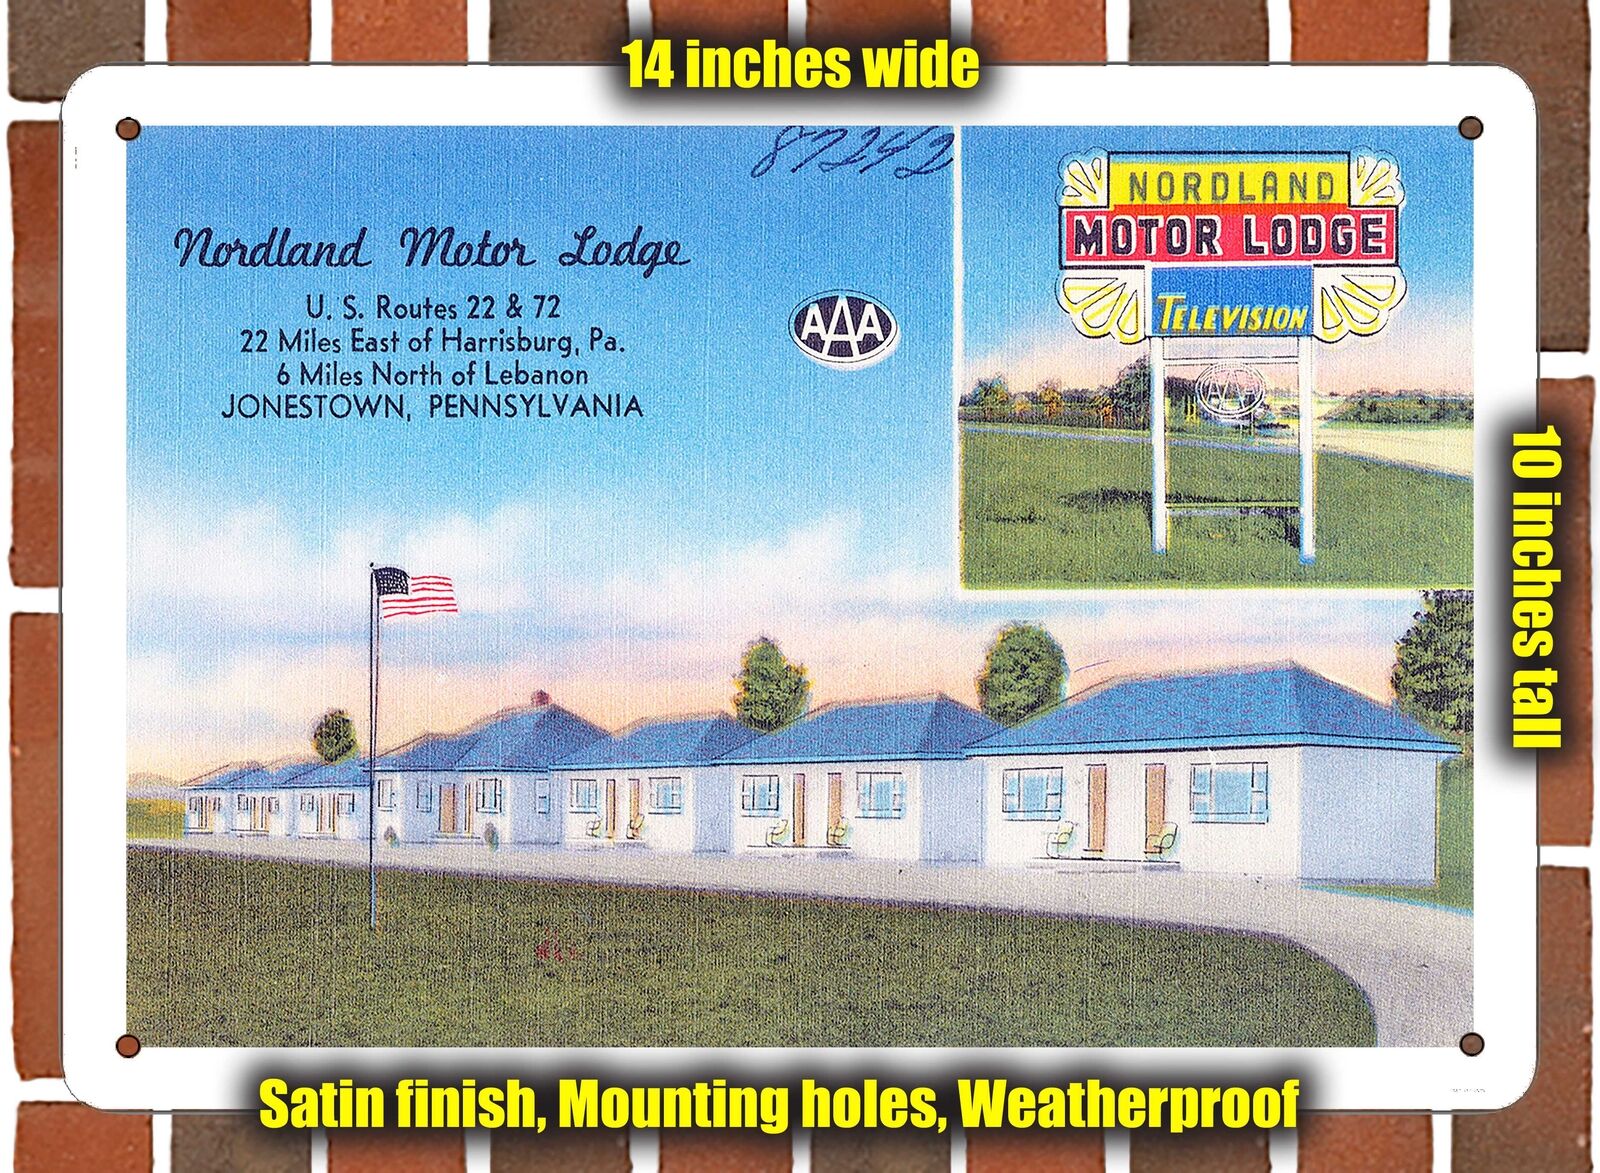 METAL SIGN - Pennsylvania Postcard - Nordland Motor Lodge, U.S. Routes 22 & 72,